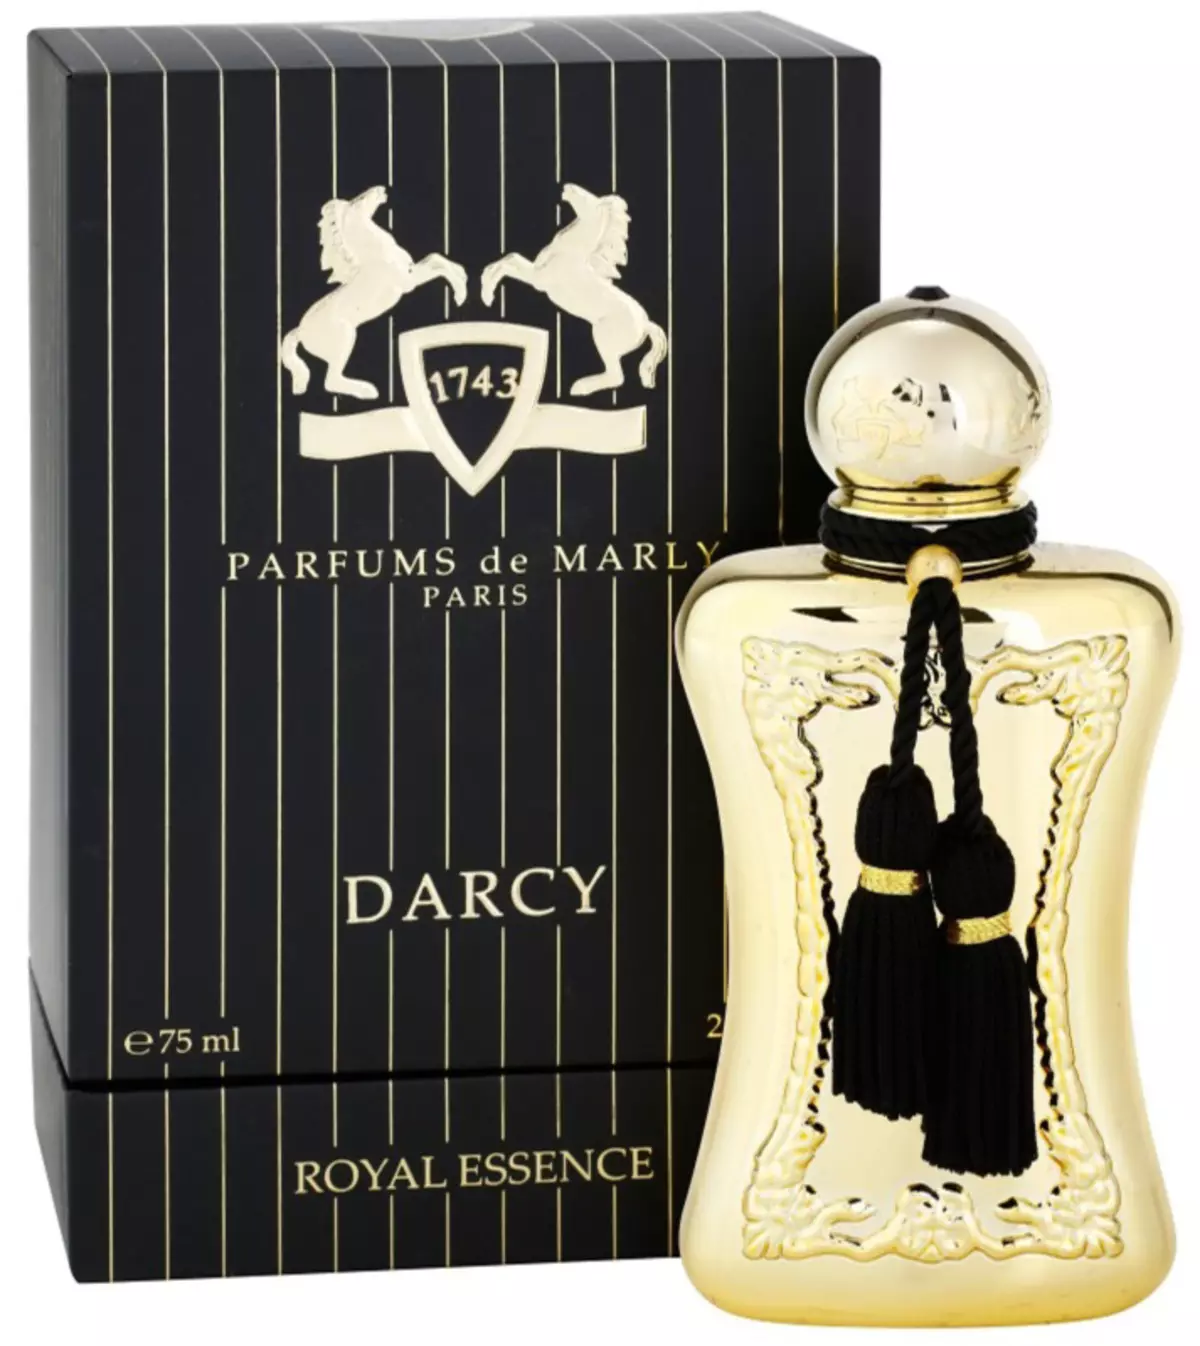 Parfums de marly perfumes: டெலினா, meloiora மற்றும் layton, erood மற்றும் darley, cassili மற்றும் பிற ஆவிகள், தேர்வு அளவுகோல், விமர்சனங்களை 25169_34